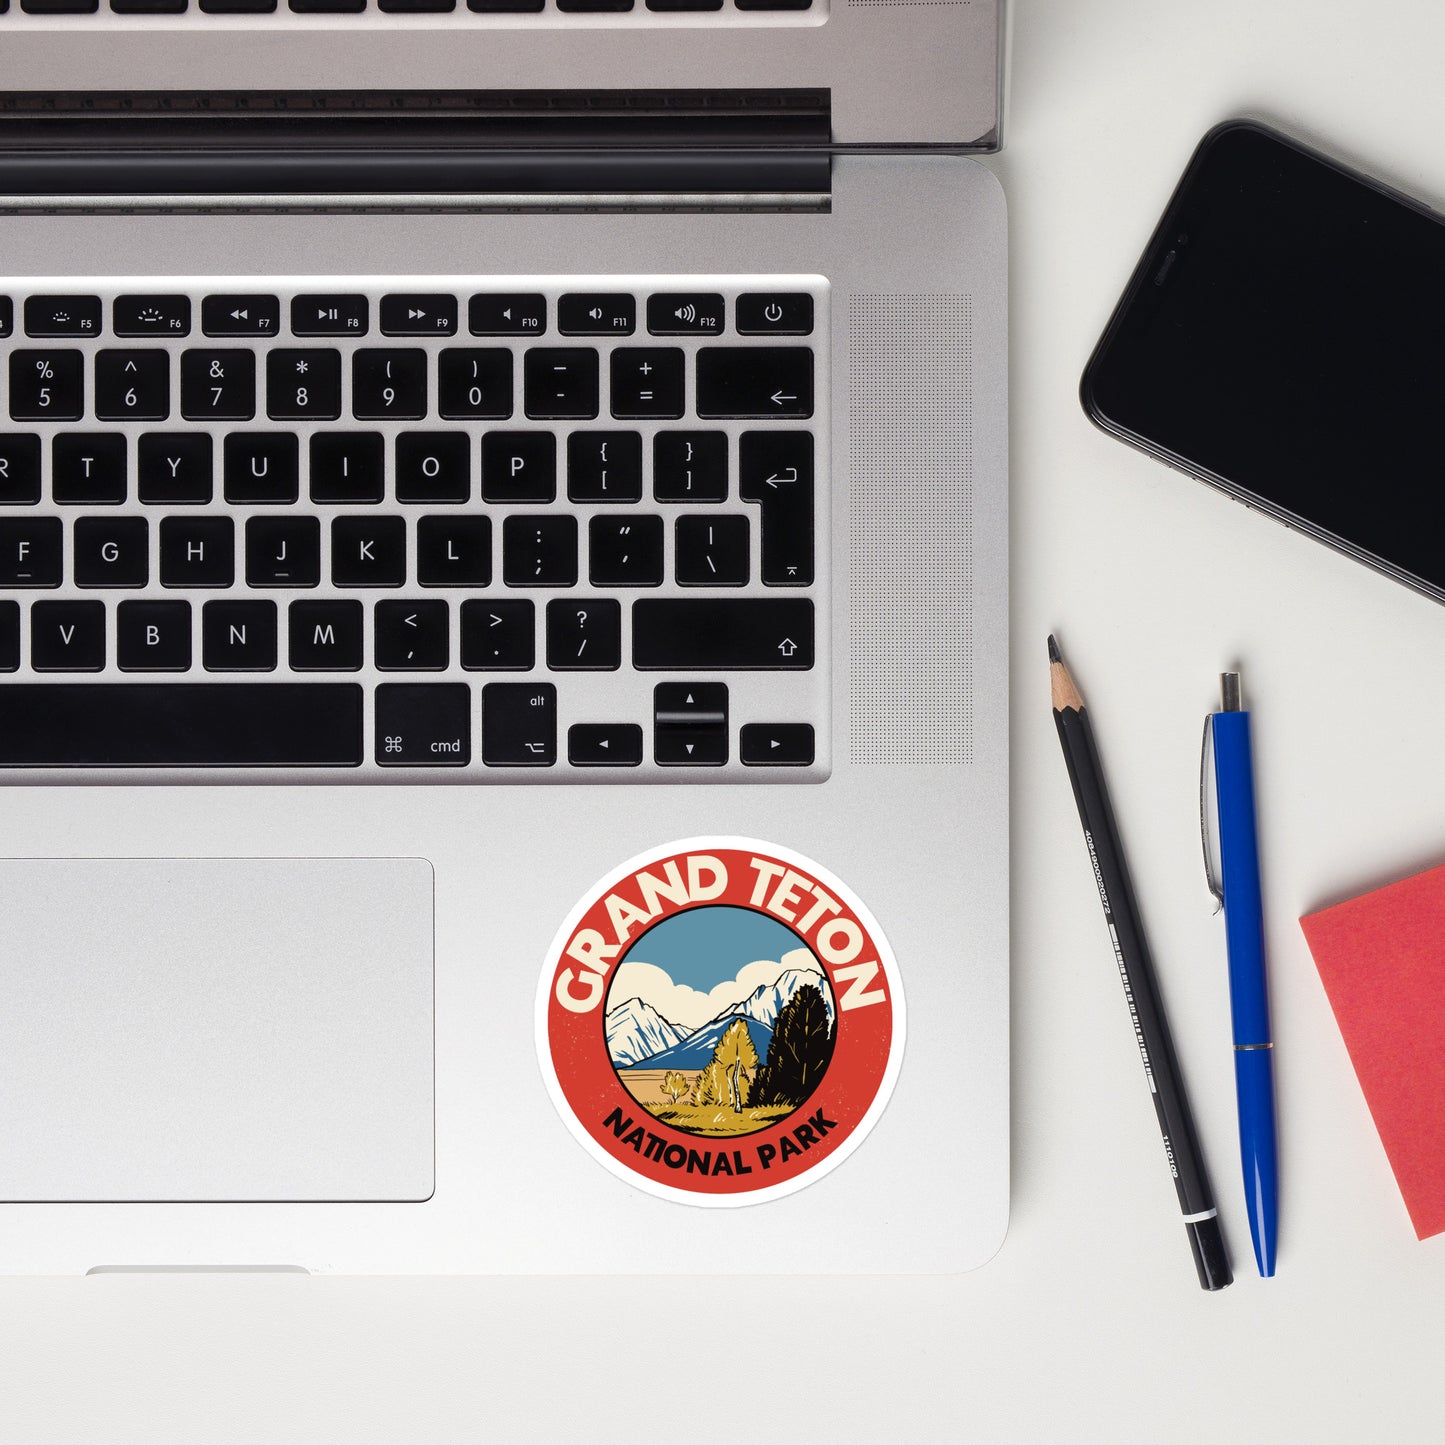 A sticker of Grand Teton National Park on a laptop